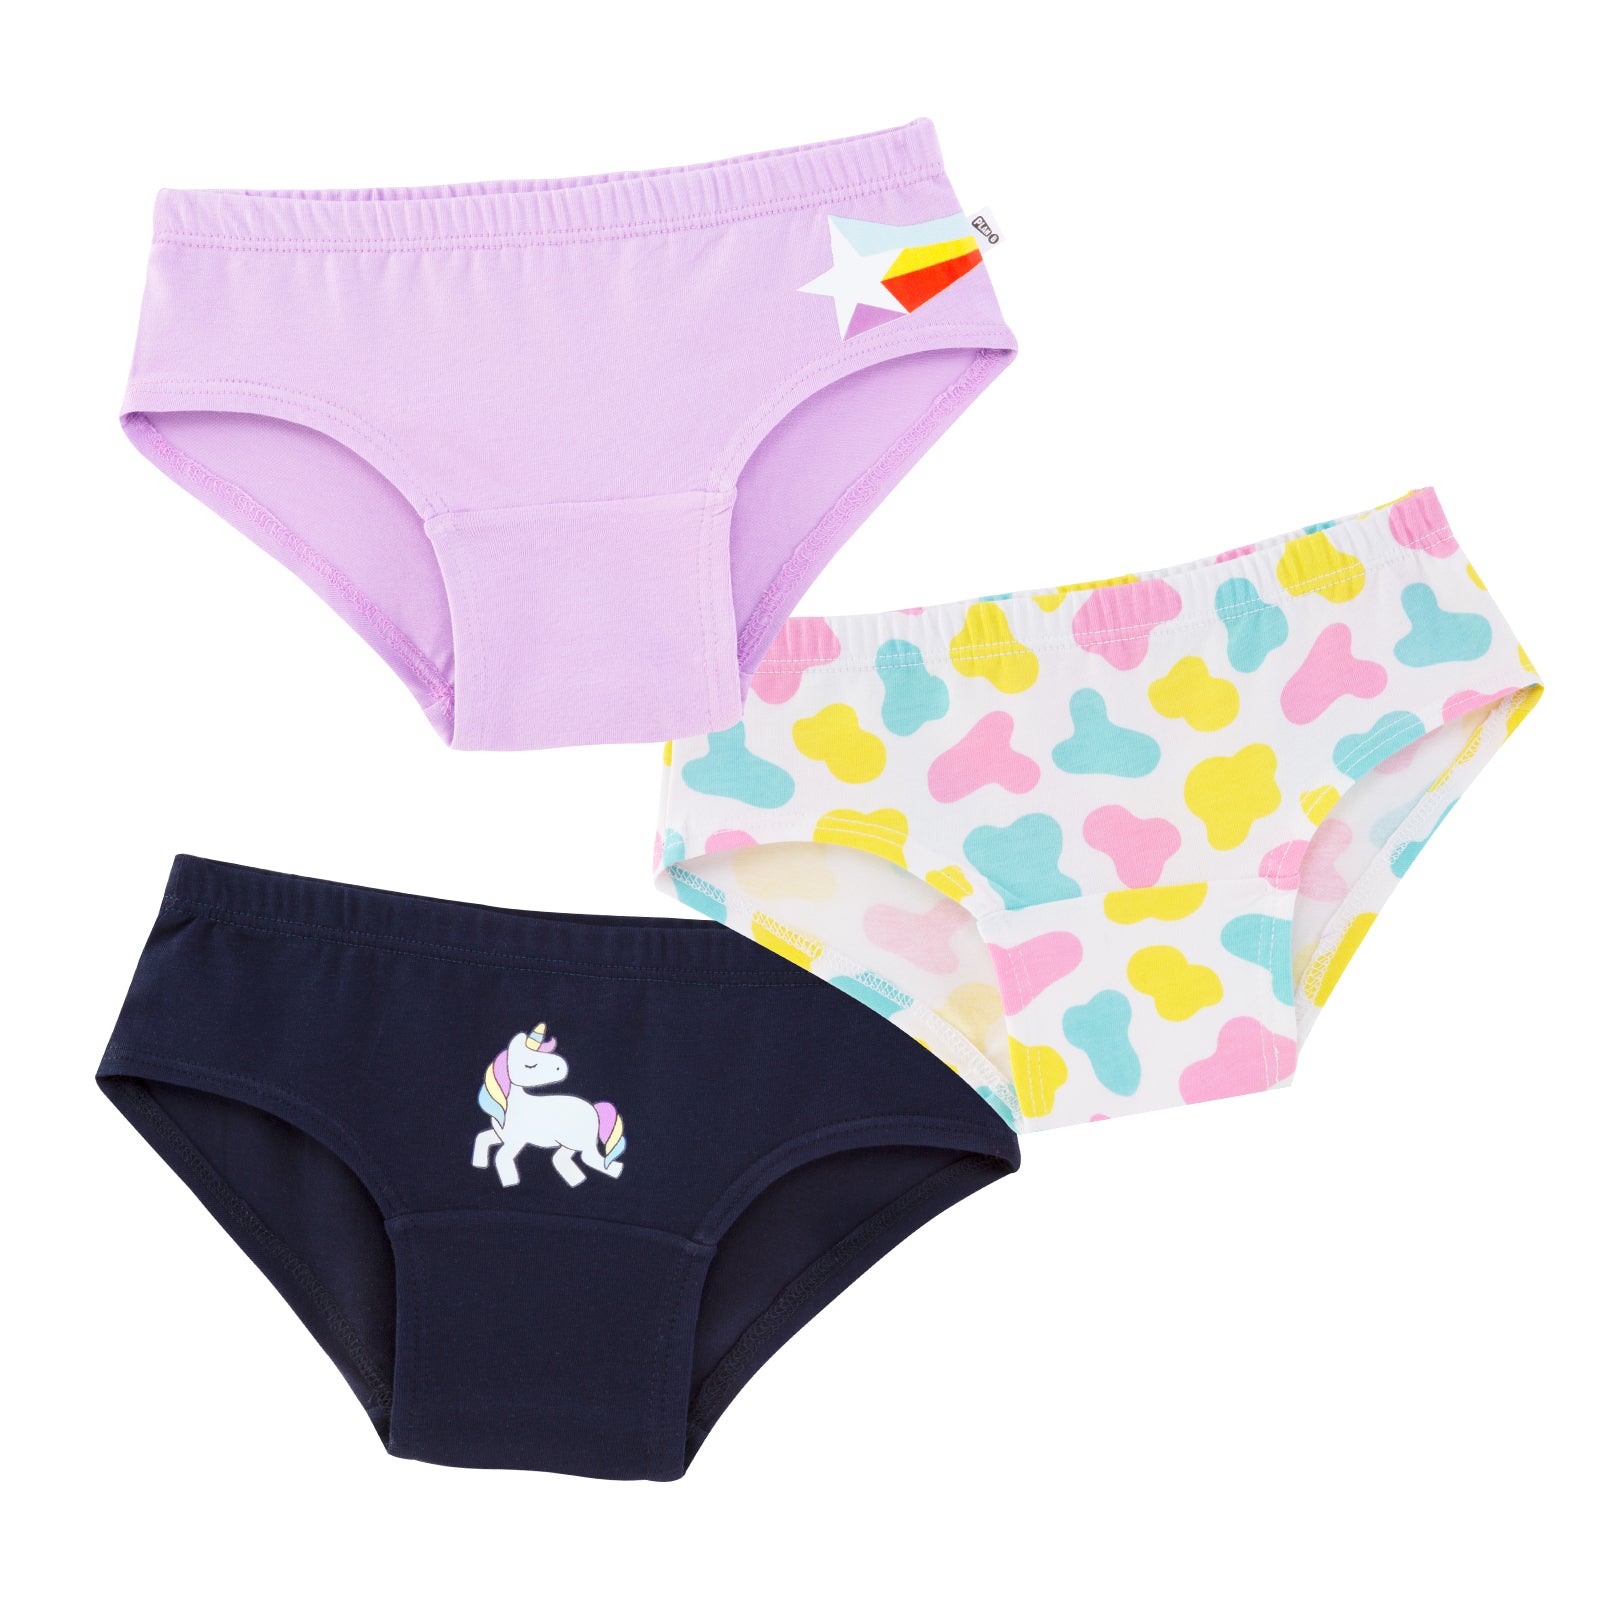 Kids Bikini/Hipster Panties Pack of 3 Assorted Colors - Inneramour